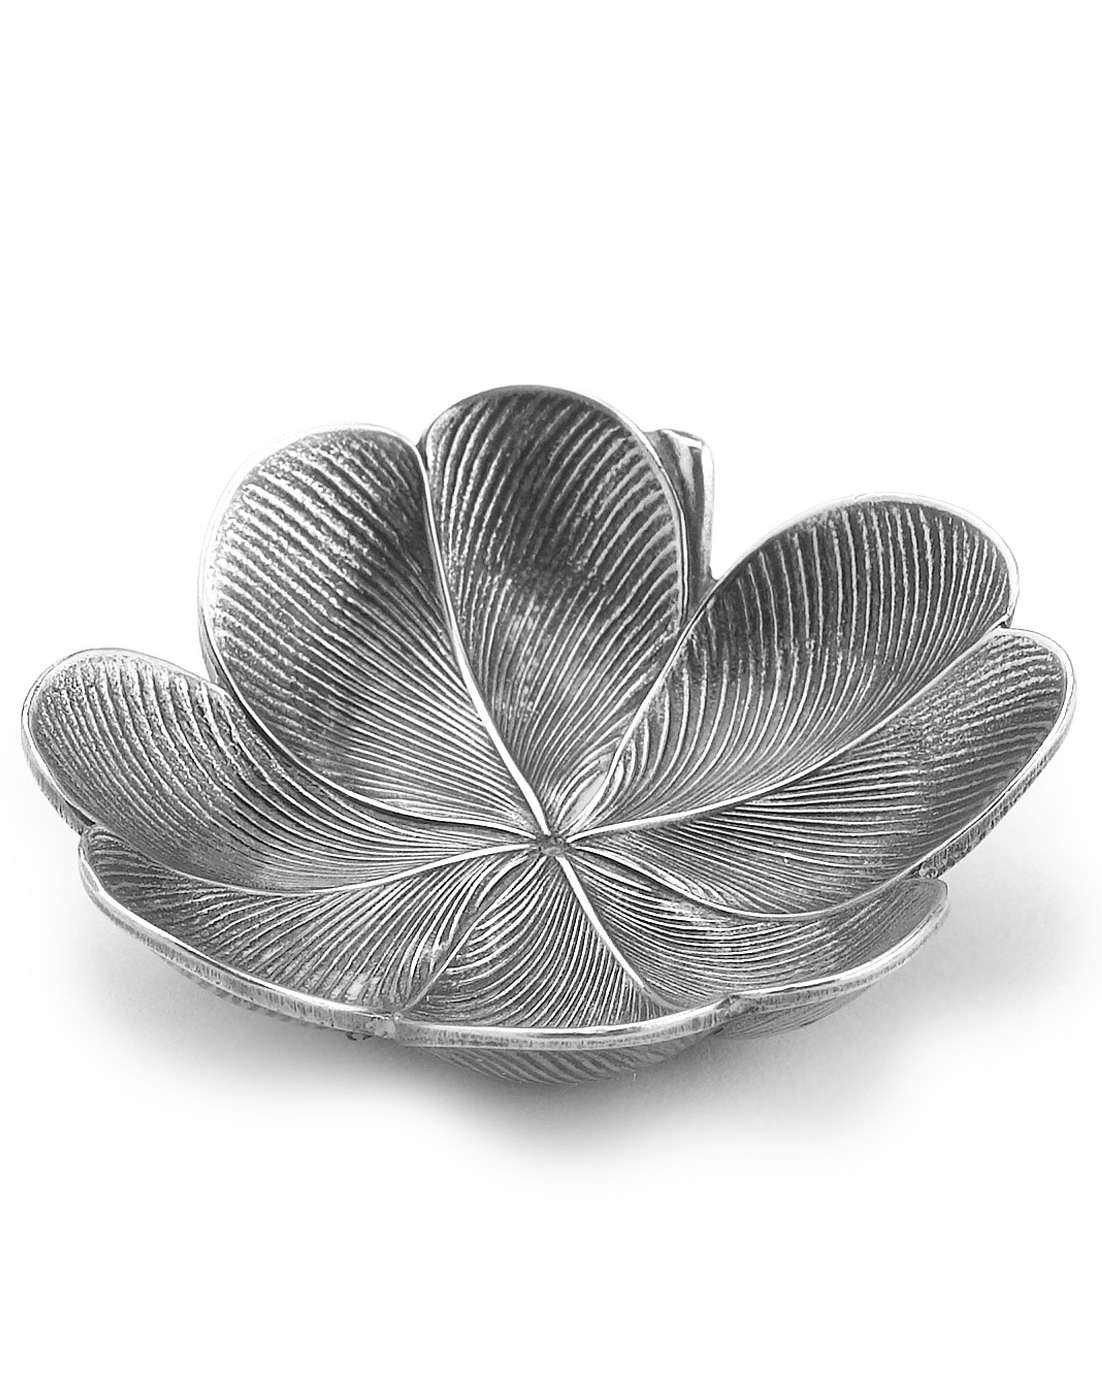 michael-c-fina-leaf-dish.jpg